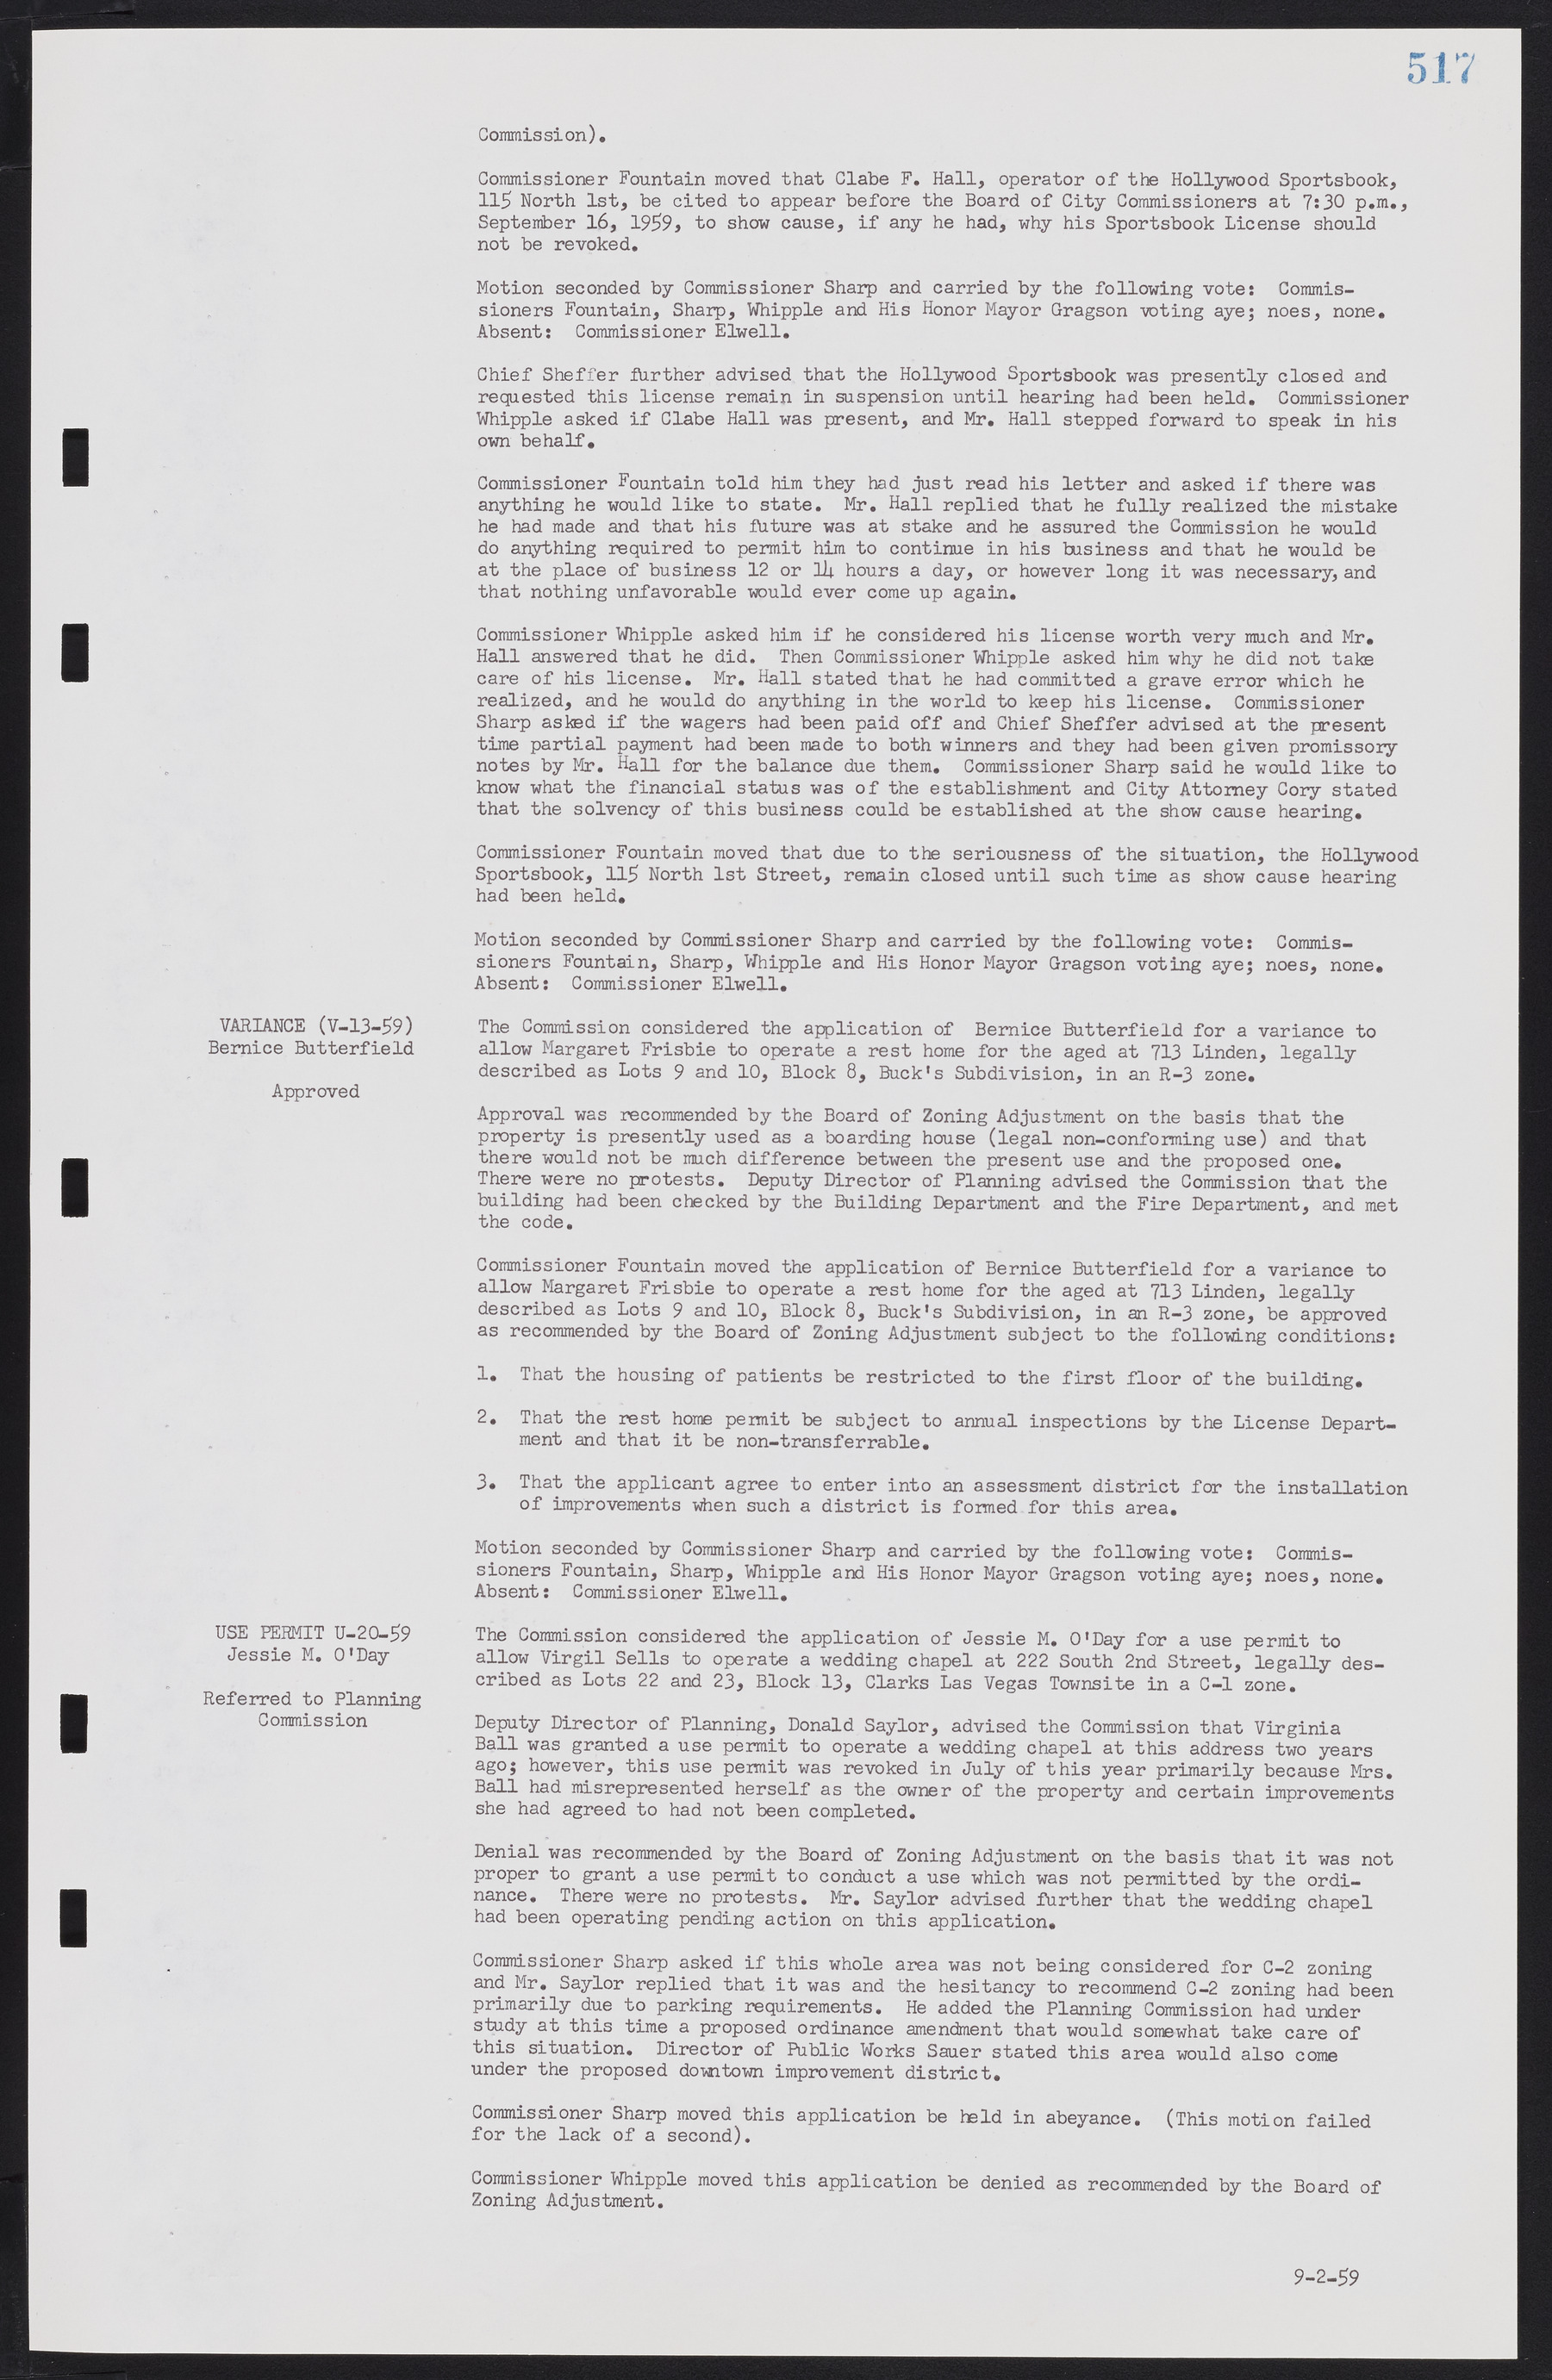 Las Vegas City Commission Minutes, November 20, 1957 to December 2, 1959, lvc000011-553